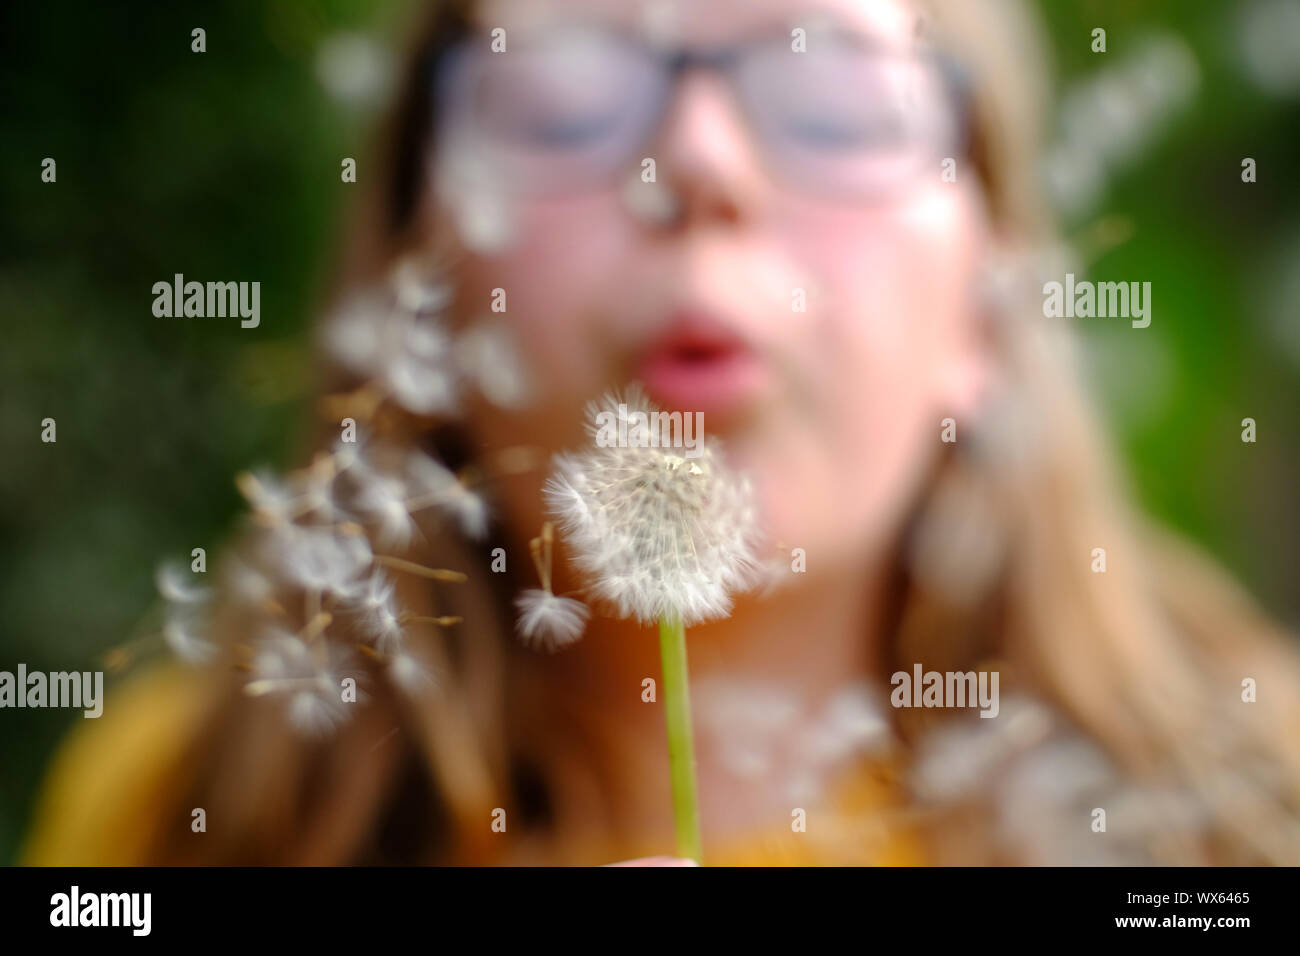 Child blowing dandelion seedhead. Stock Photo